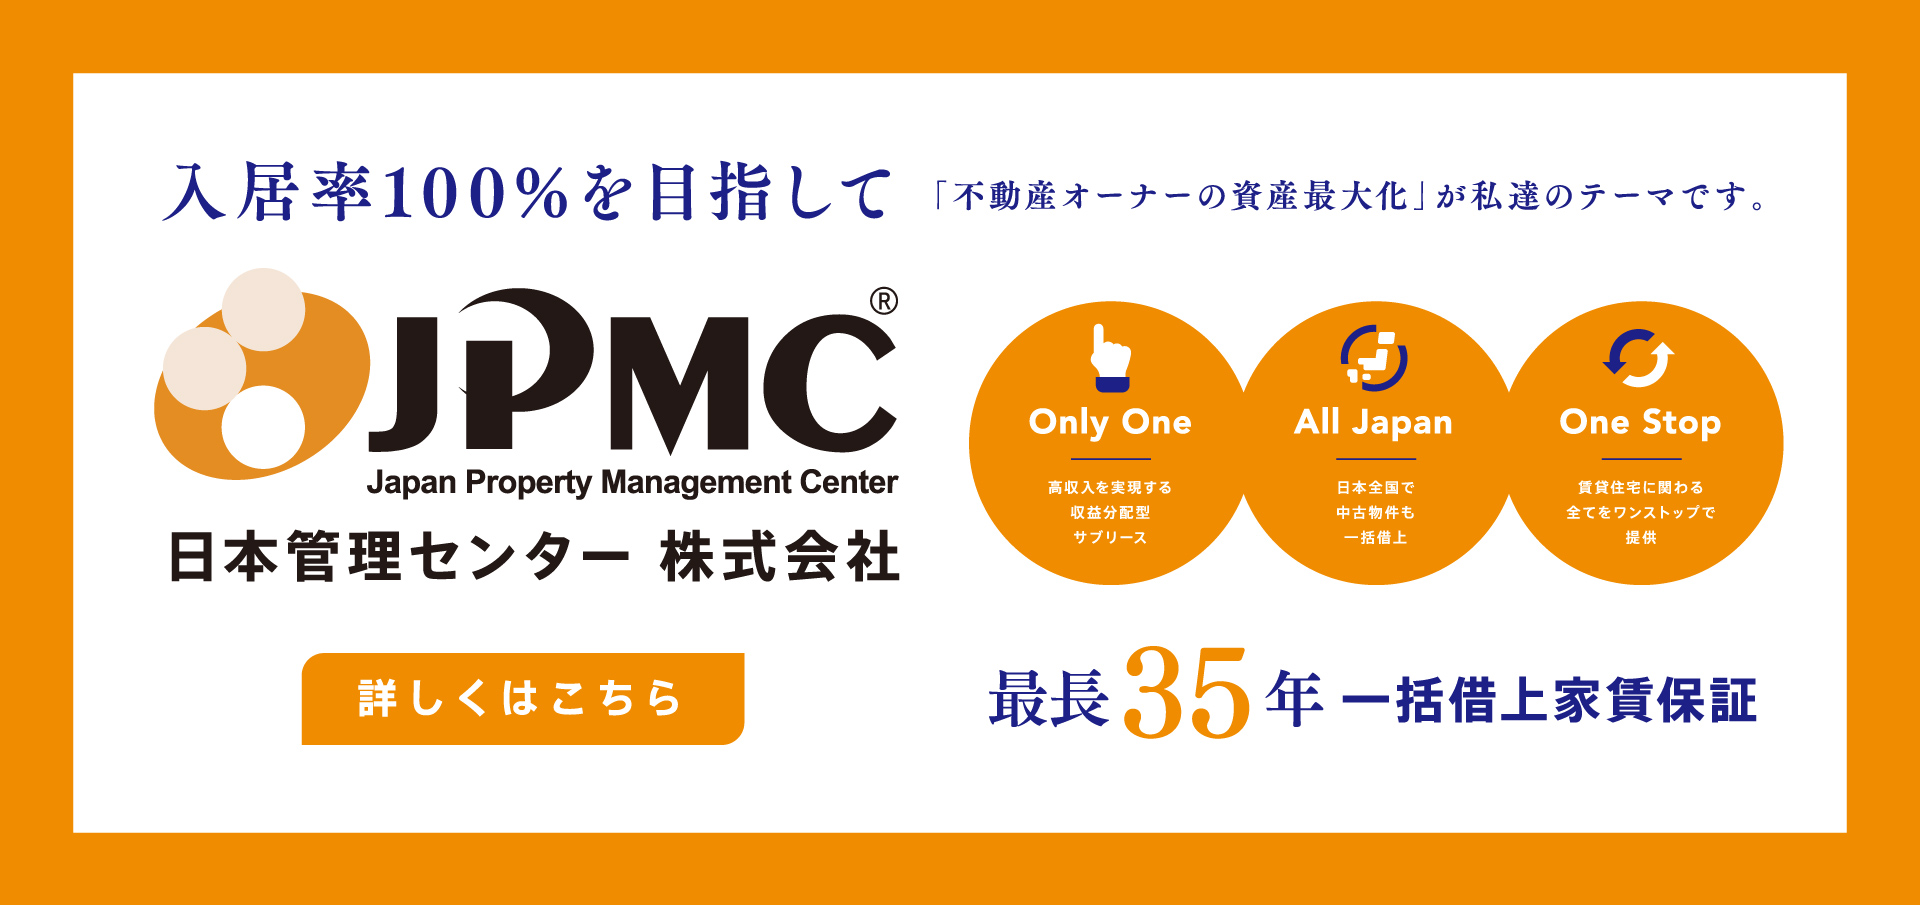 JPMC 日本管理センター株式会社